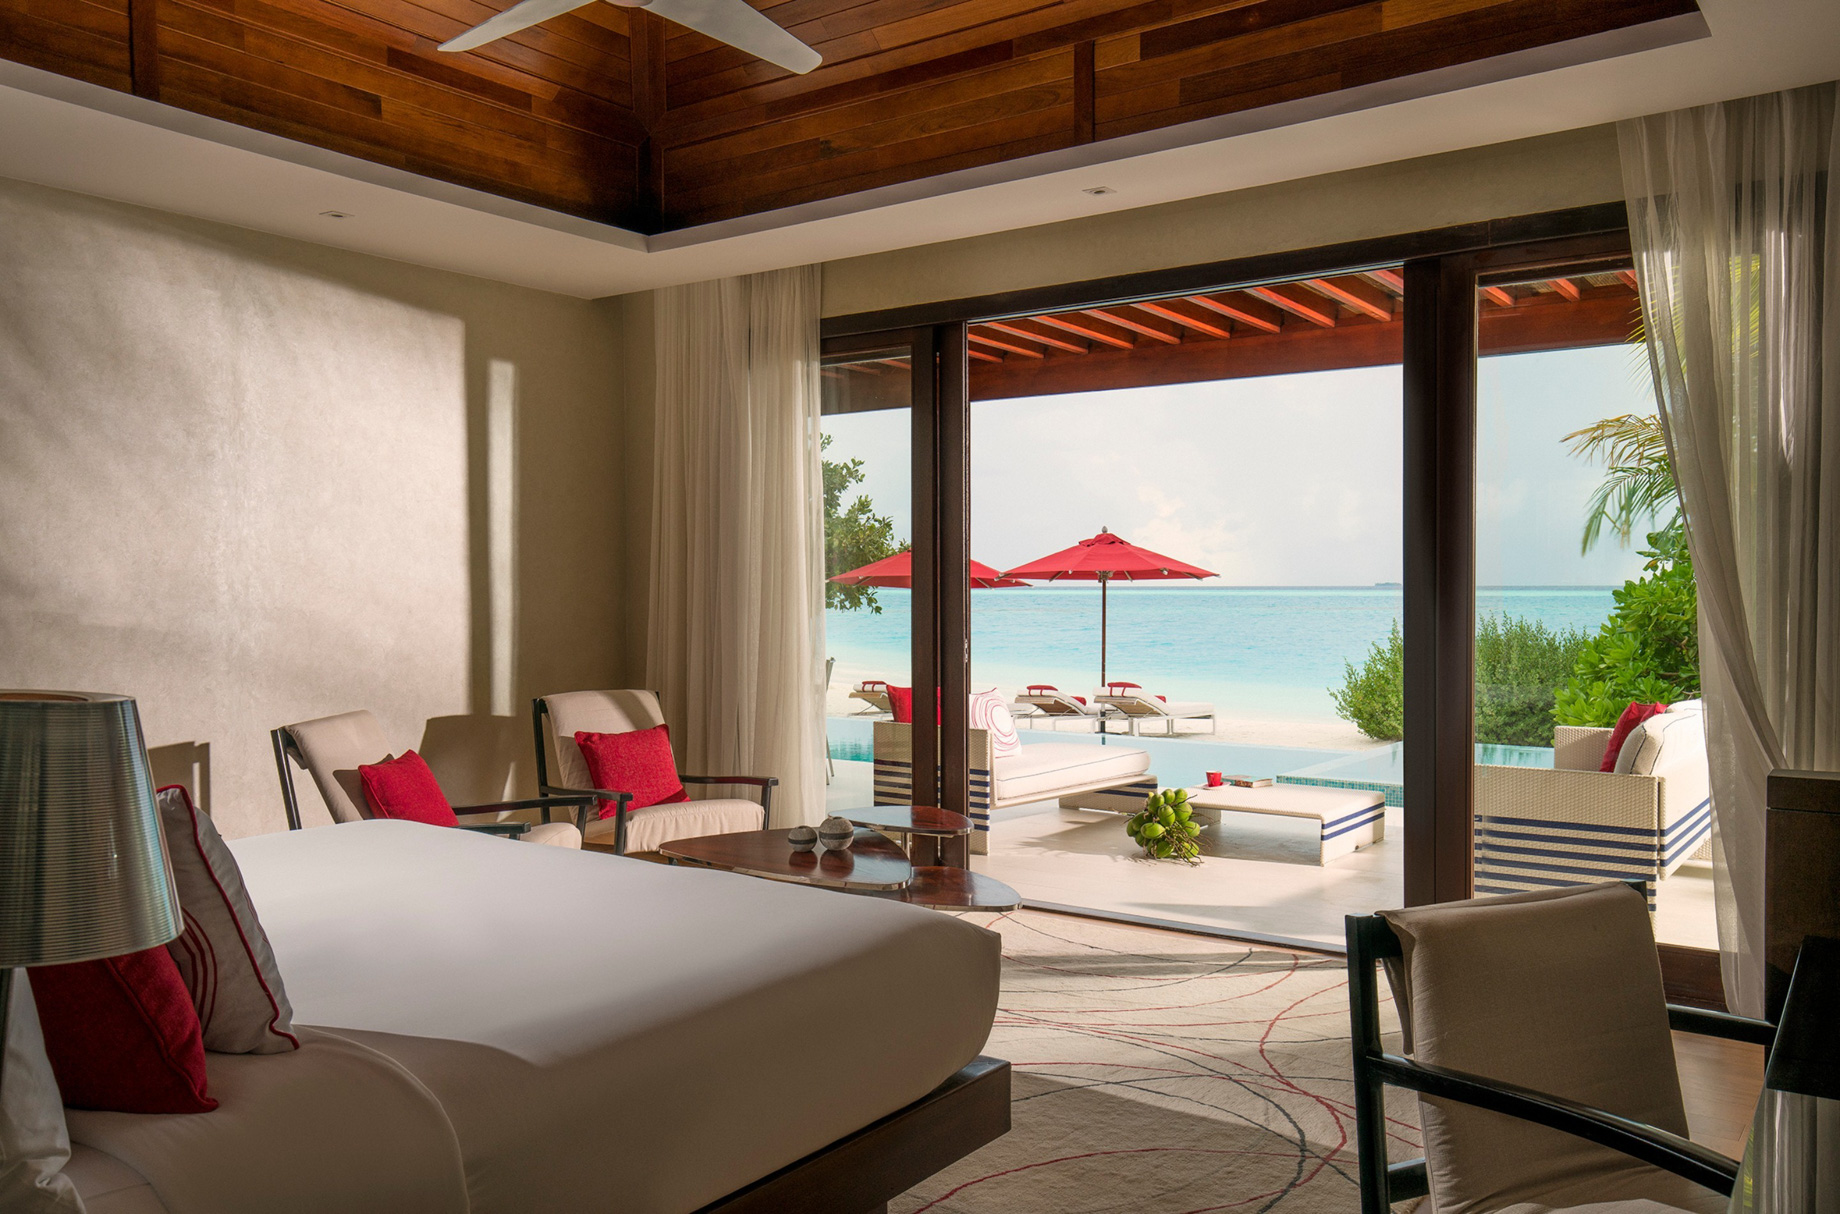 Niyama Private Islands Maldives Resort - Dhaalu Atoll, Maldives - Two Bedroom Beach Pool Pavilion Bedroom View